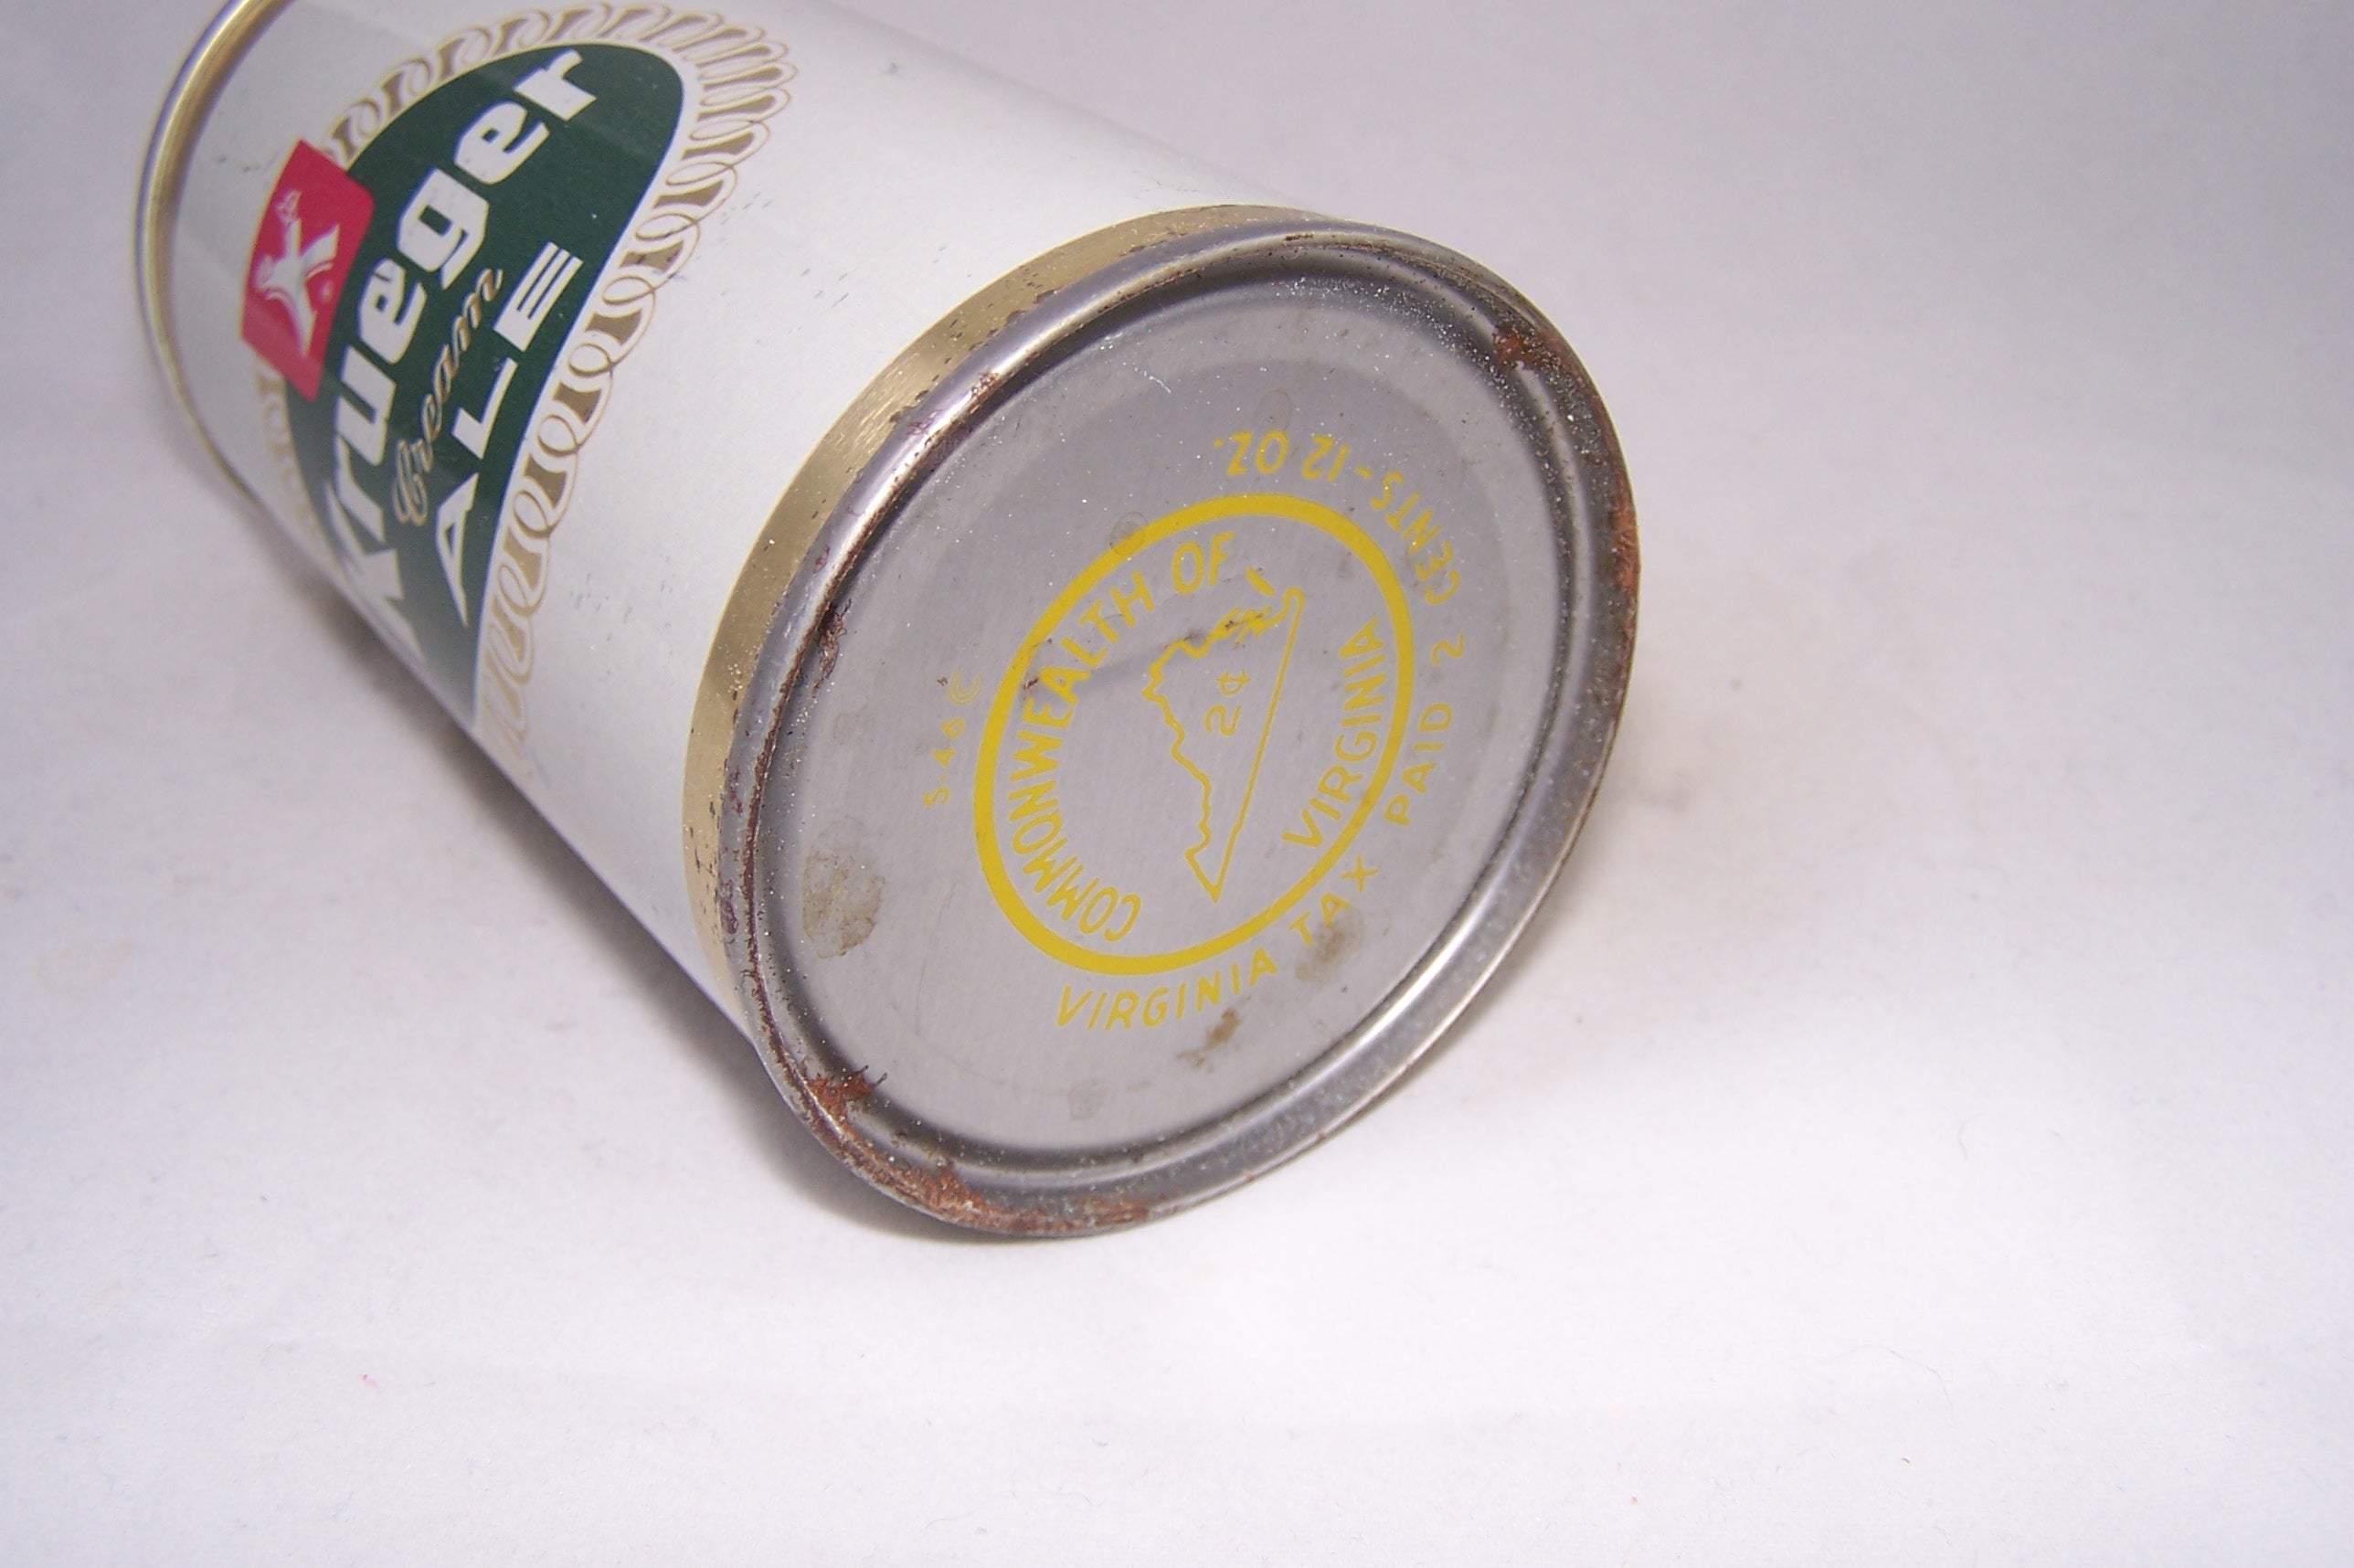 Krueger Cream Ale, USBC II 86-28 Grade 1- Sold on 07/23/18